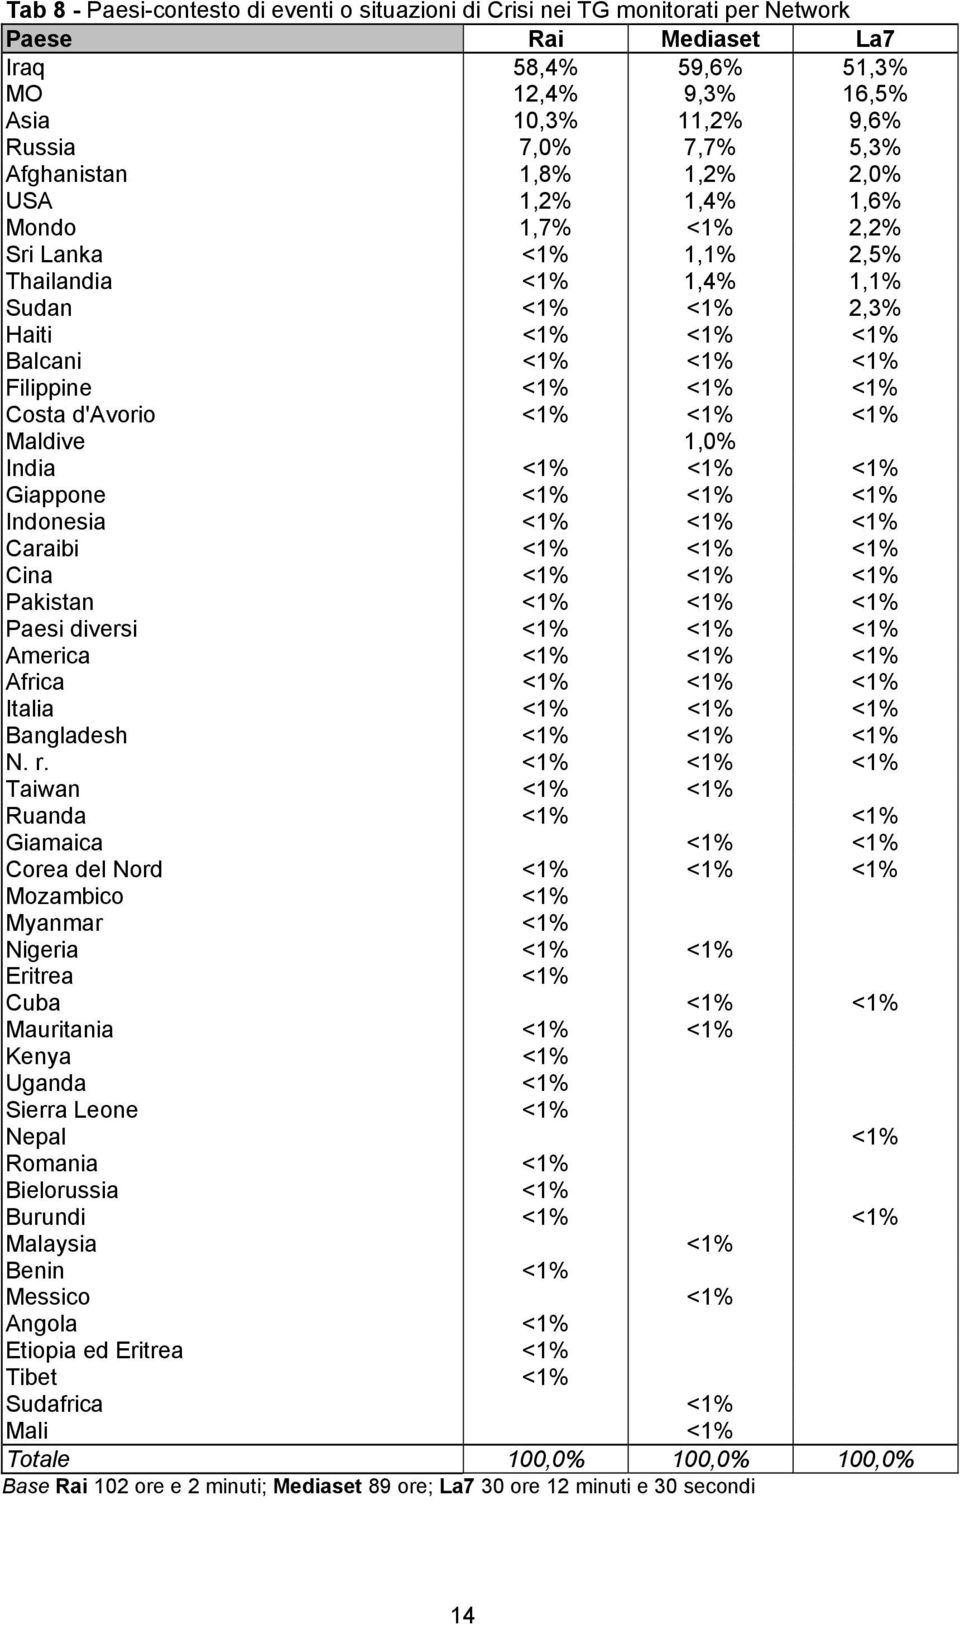 d'avorio <1% <1% <1% Maldive 1,0% India <1% <1% <1% Giappone <1% <1% <1% Indonesia <1% <1% <1% Caraibi <1% <1% <1% Cina <1% <1% <1% Pakistan <1% <1% <1% Paesi diversi <1% <1% <1% America <1% <1% <1%